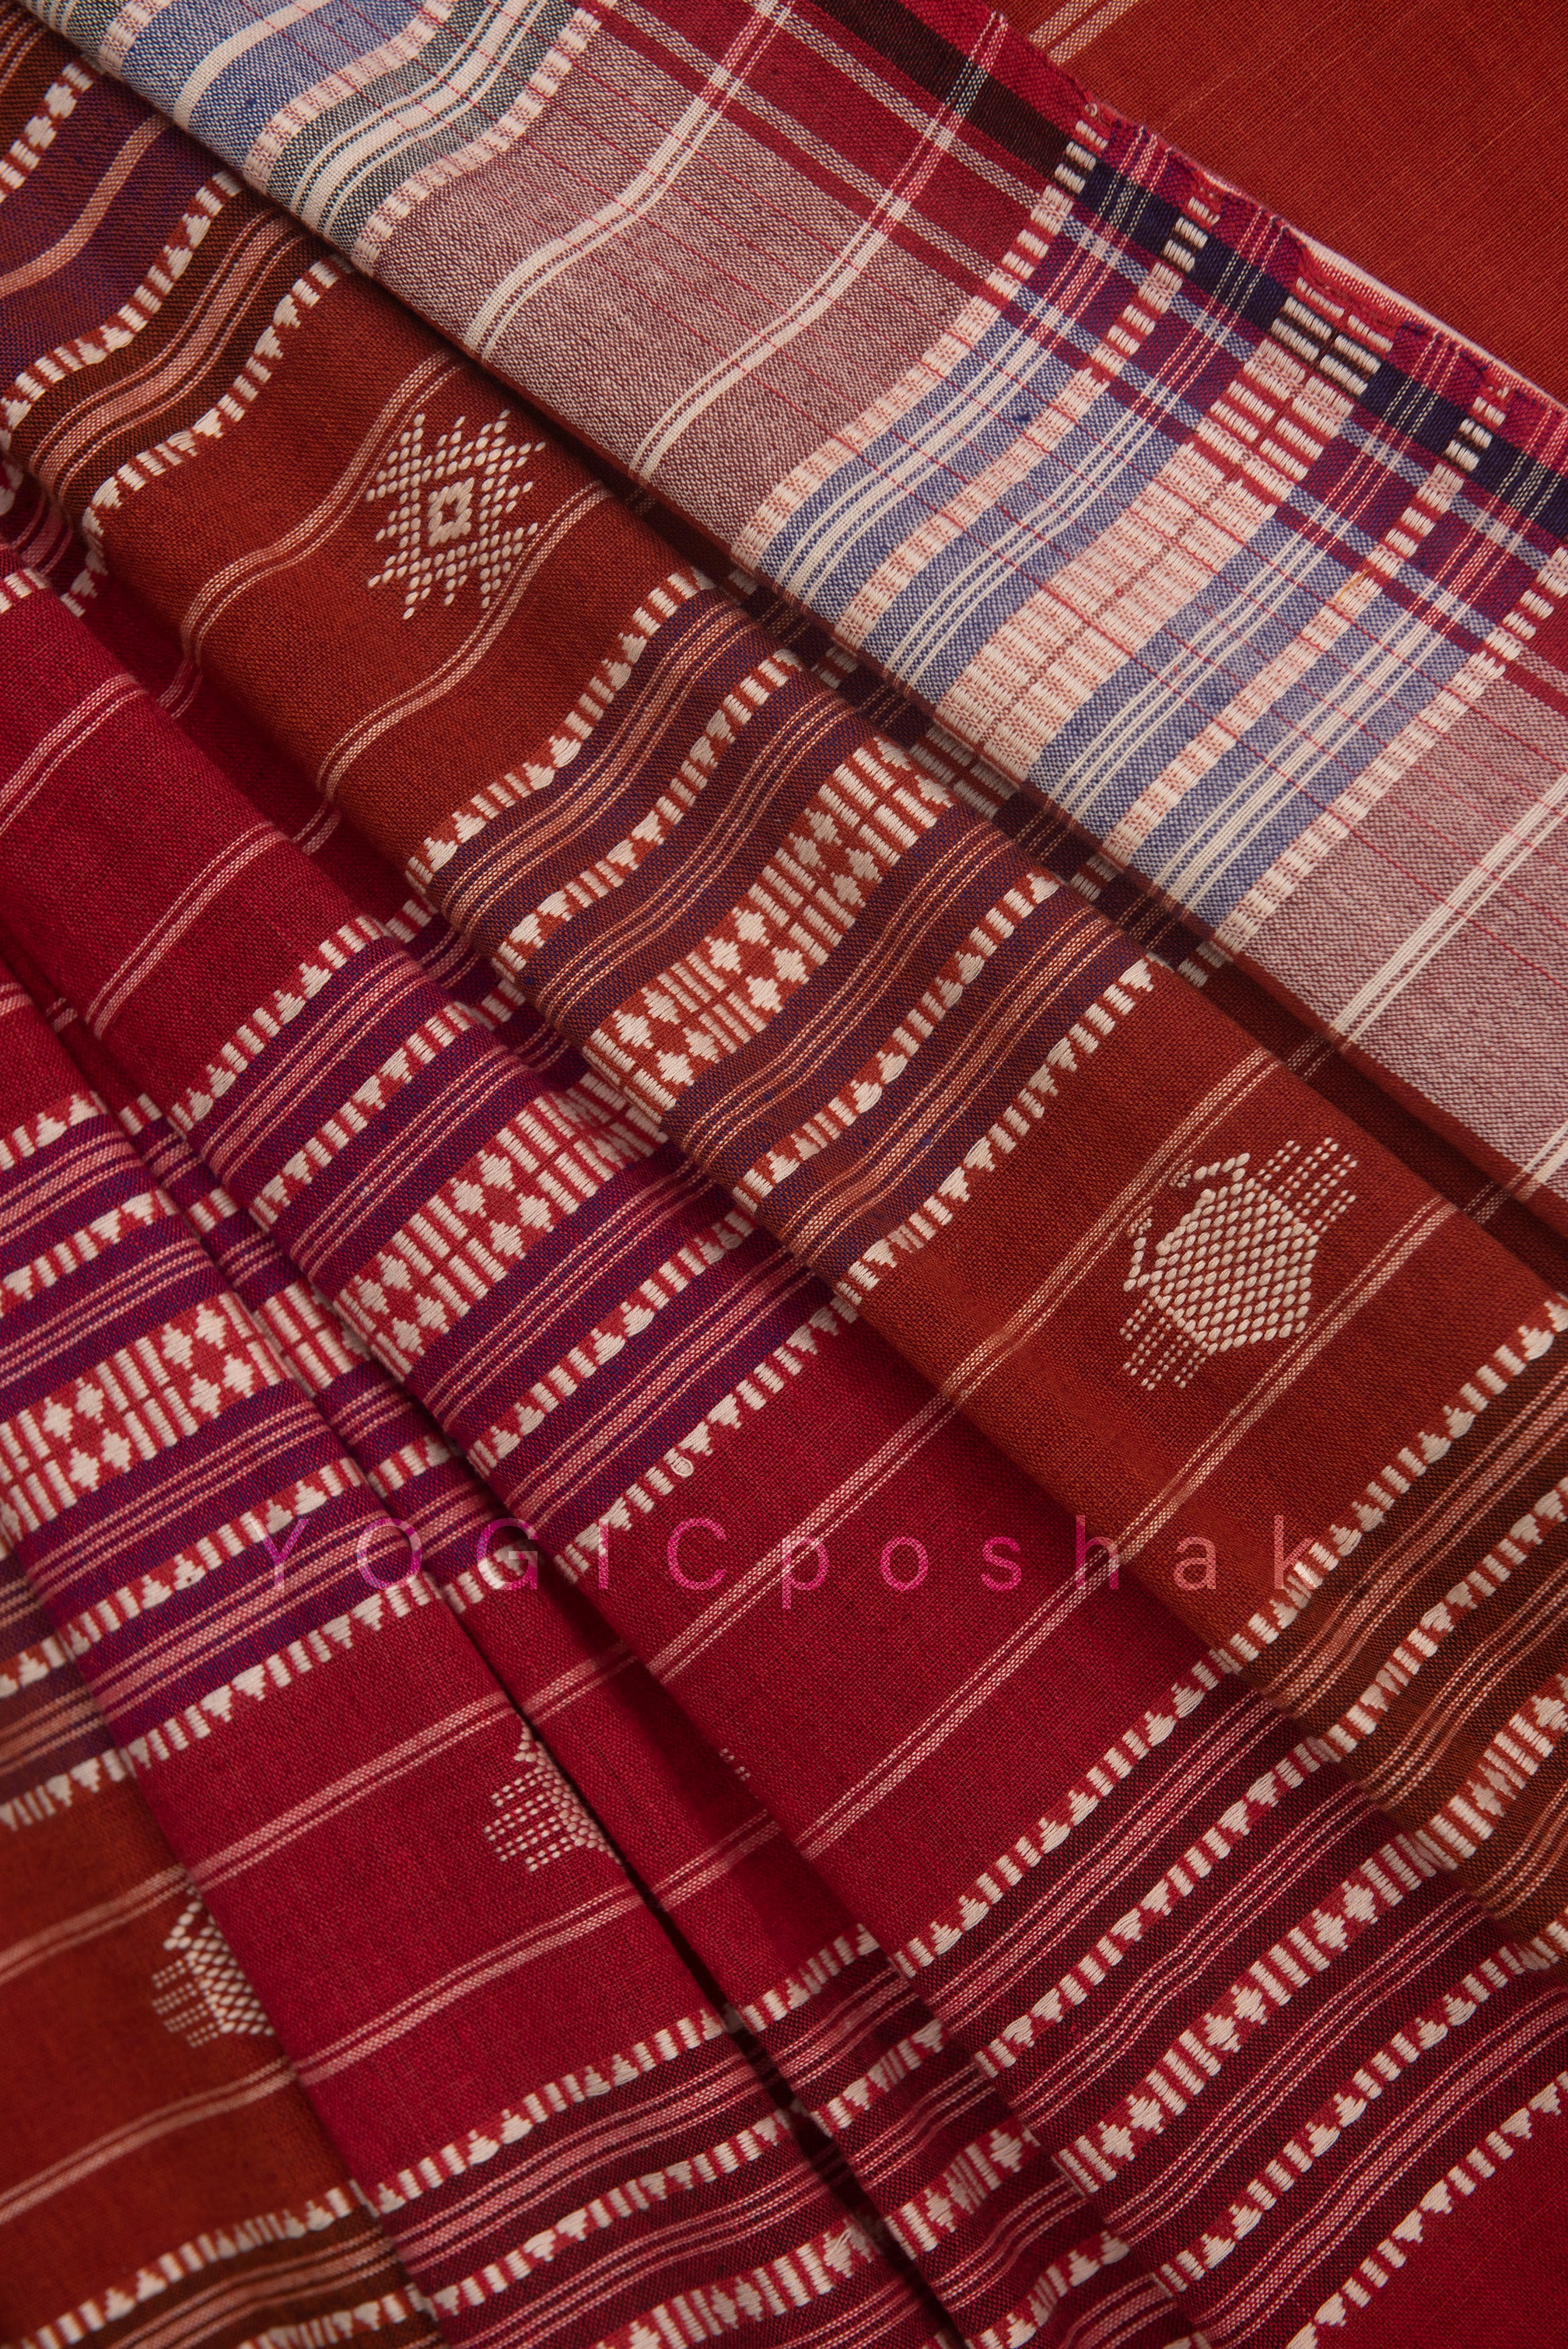 Kotpad handloom cotton saree | natural dyed